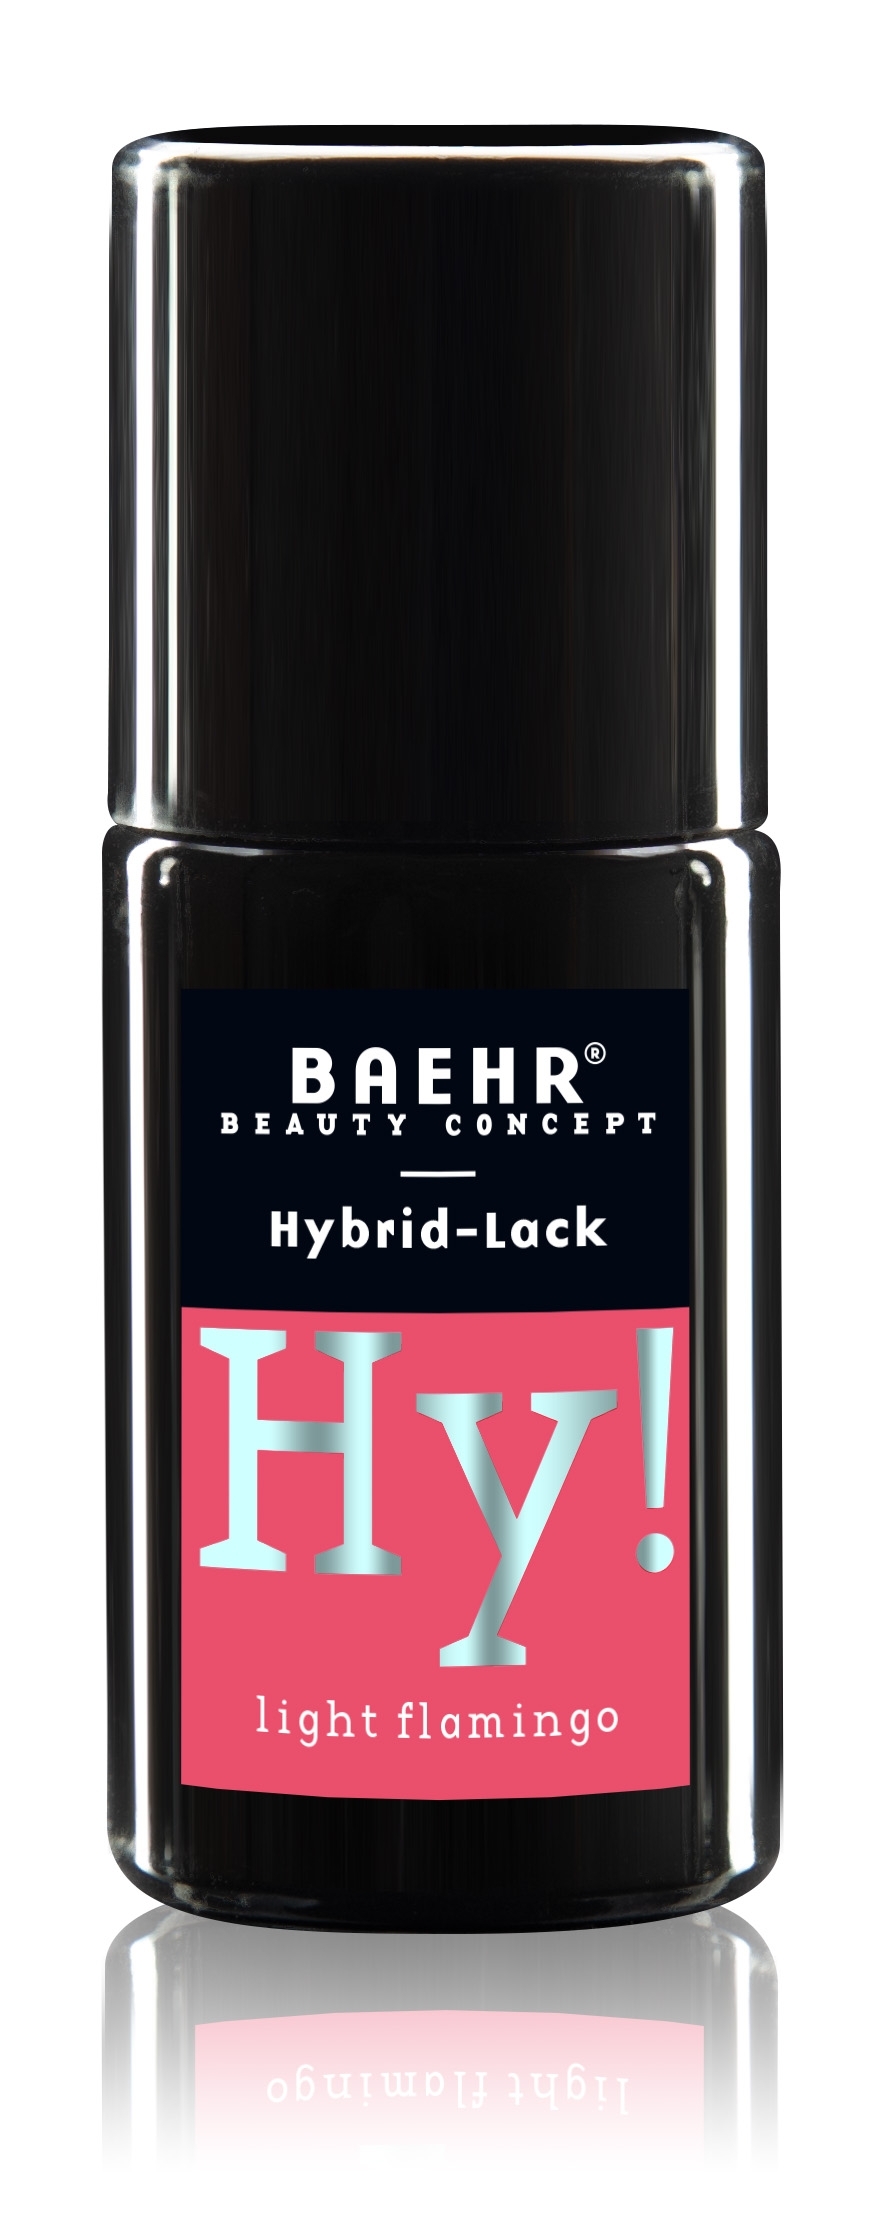 BAEHR BEAUTY CONCEPT - NAILS Hy! Hybrid-Lack, light flamingo 8 ml